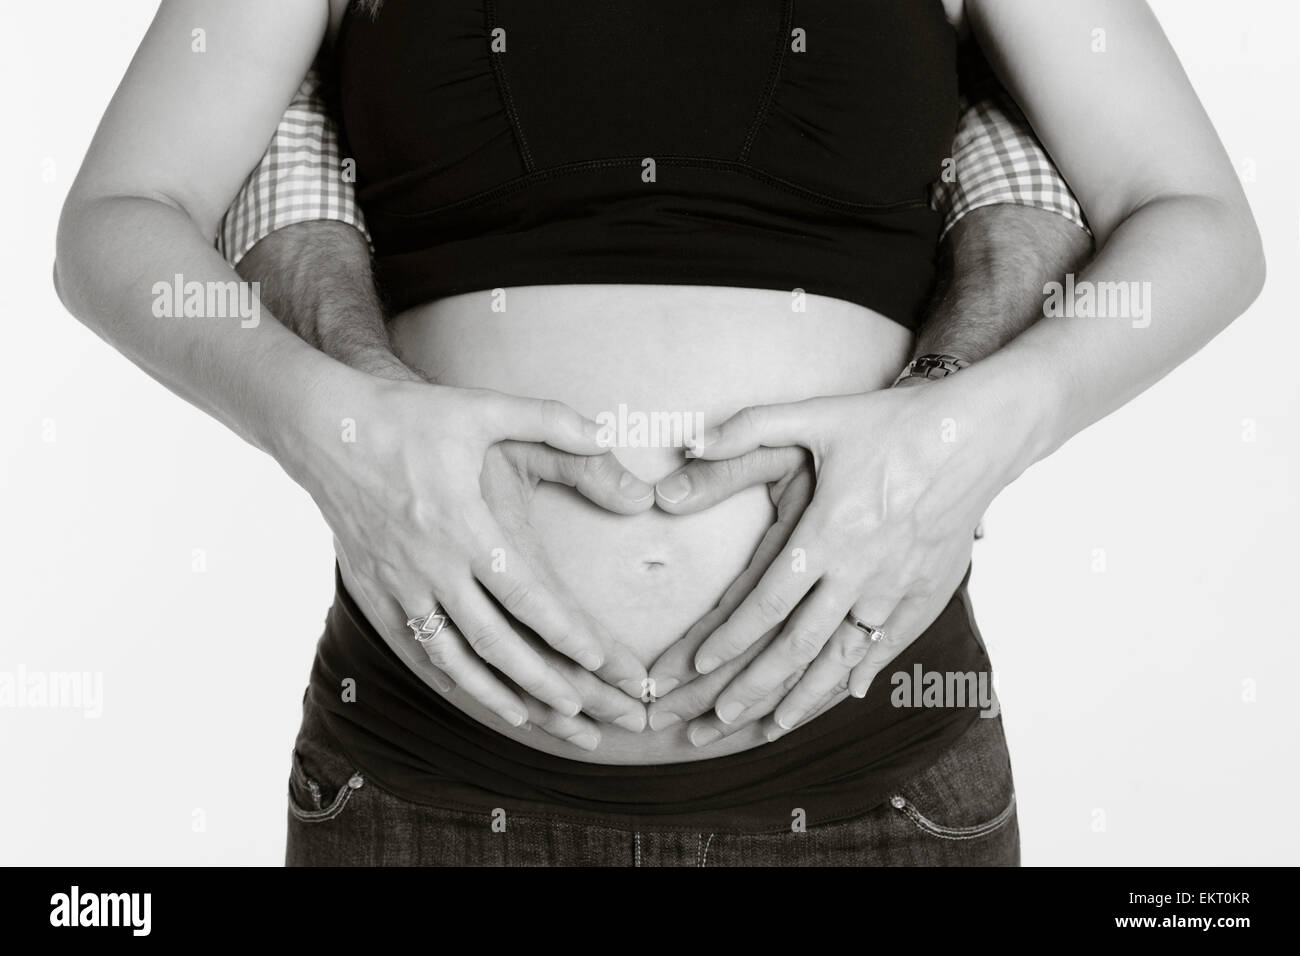 Black White Image Pregnant Belly Stock Photos & Black White Image ...